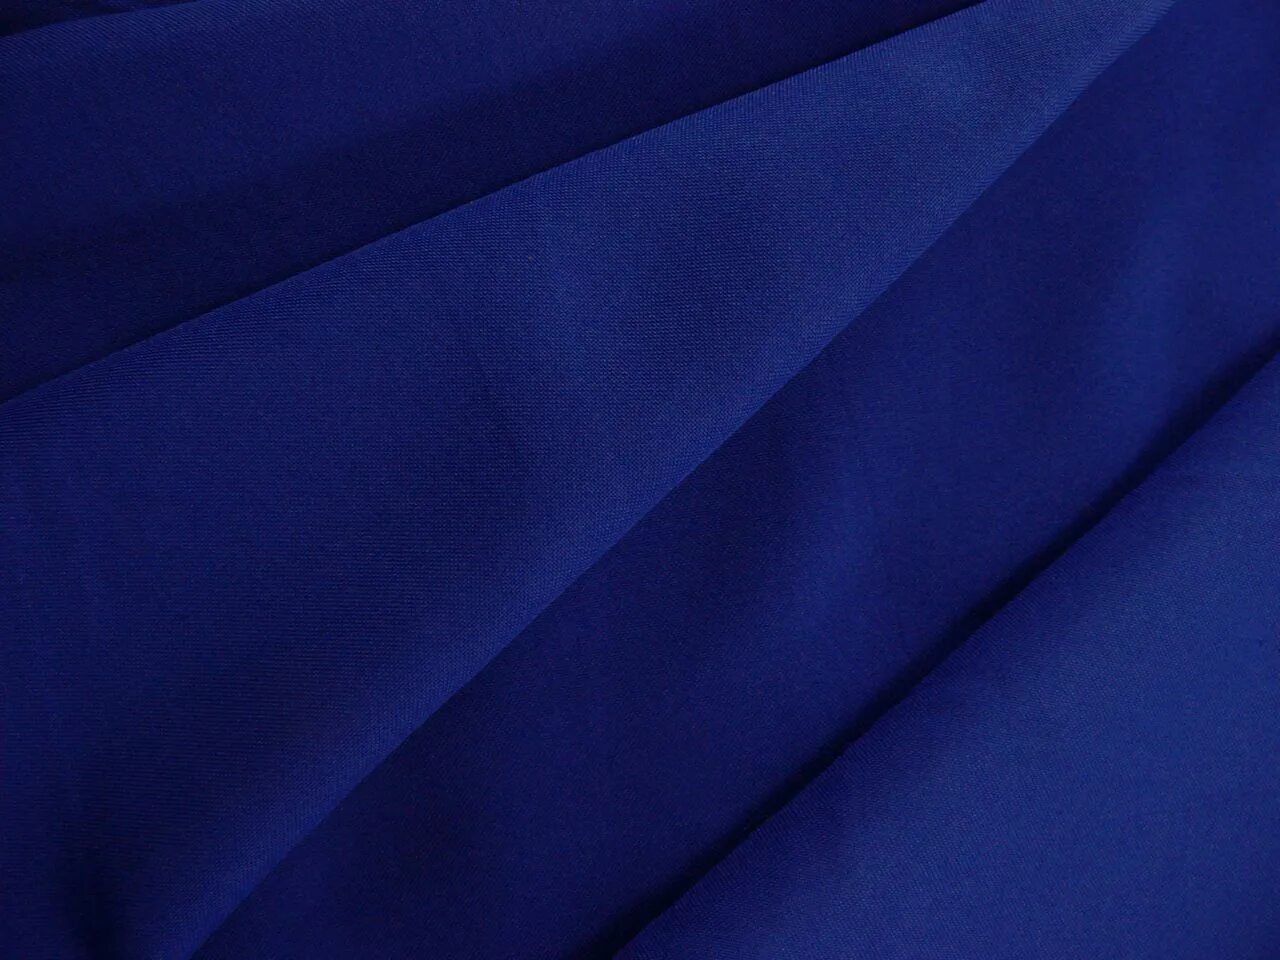 Габардин Фабрикс. Габардин ткань Василек. Габардин синий 19-3864 TPX. Ткань габардин синий. Плотный великий